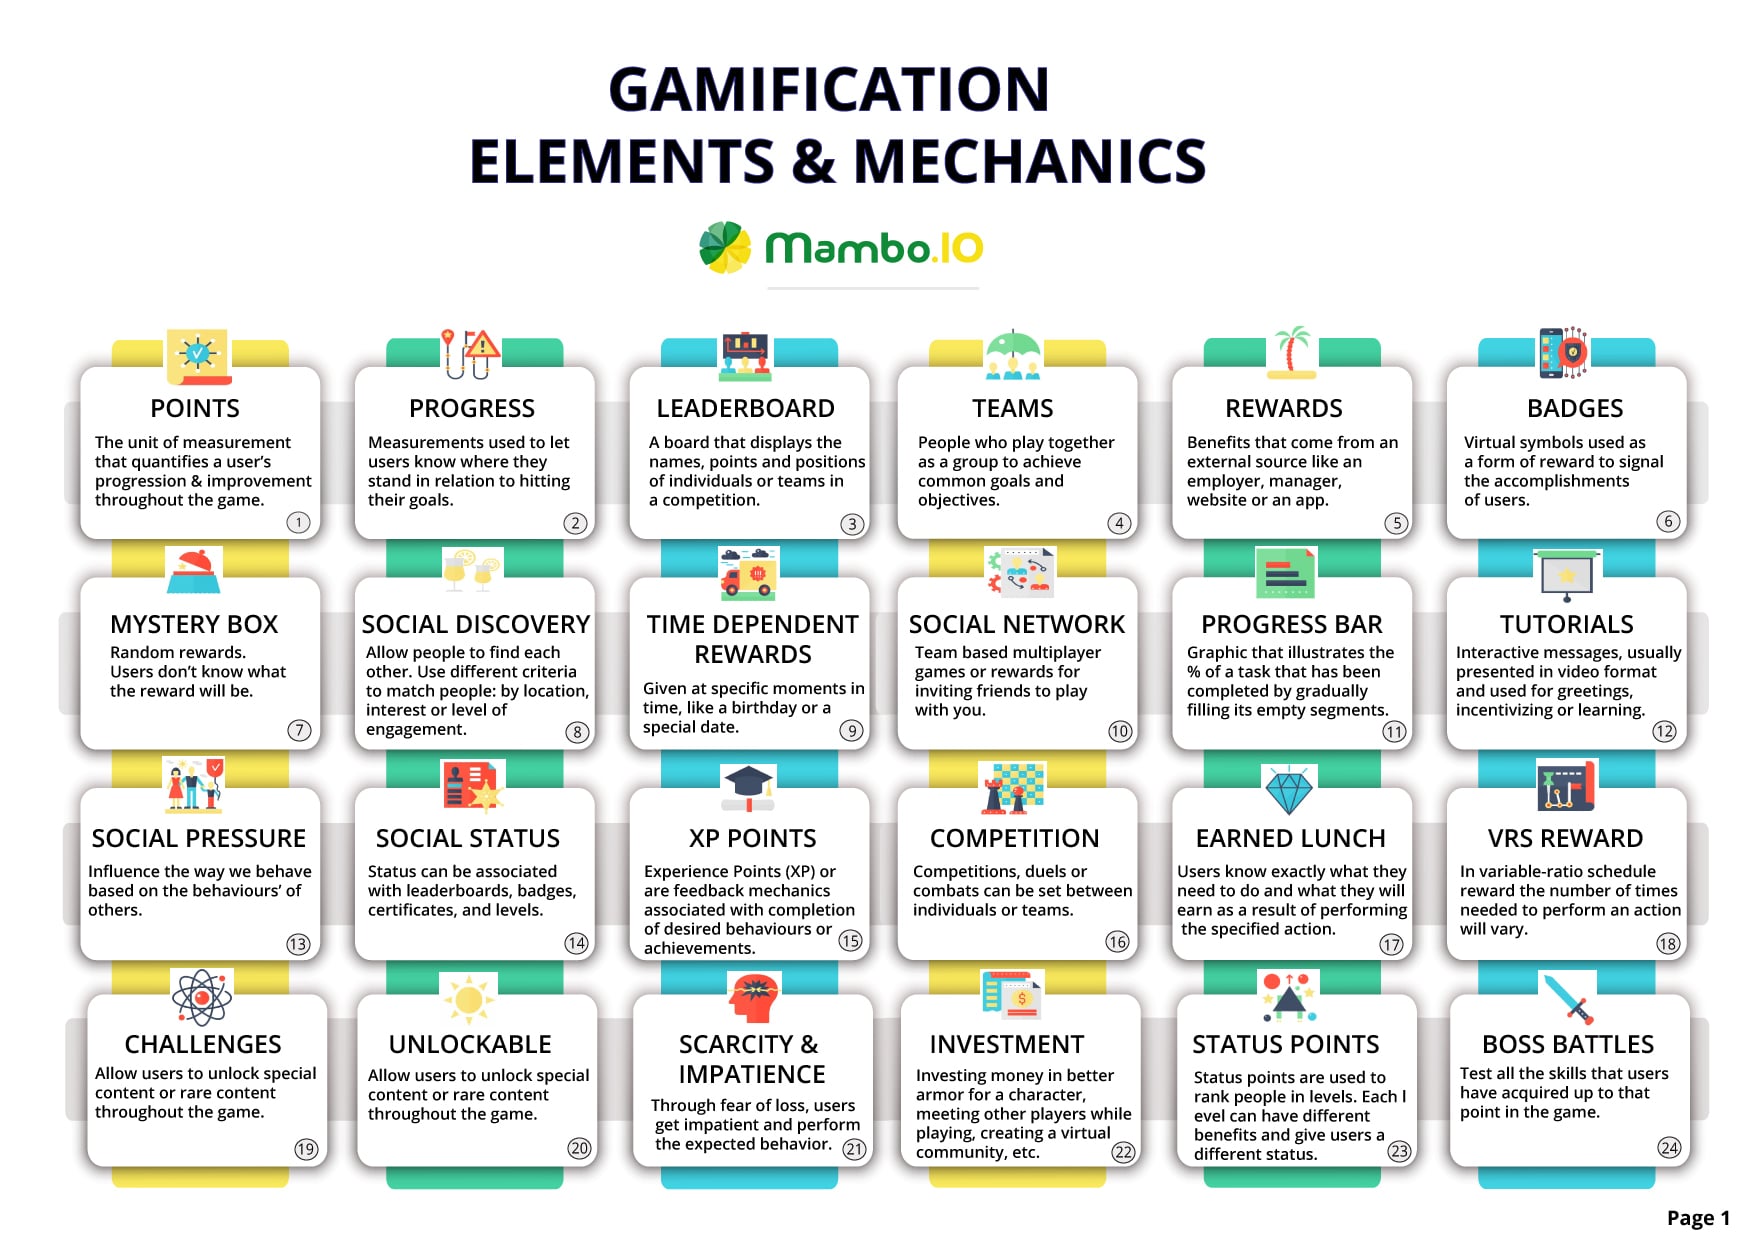 Gamification elements and mechanics